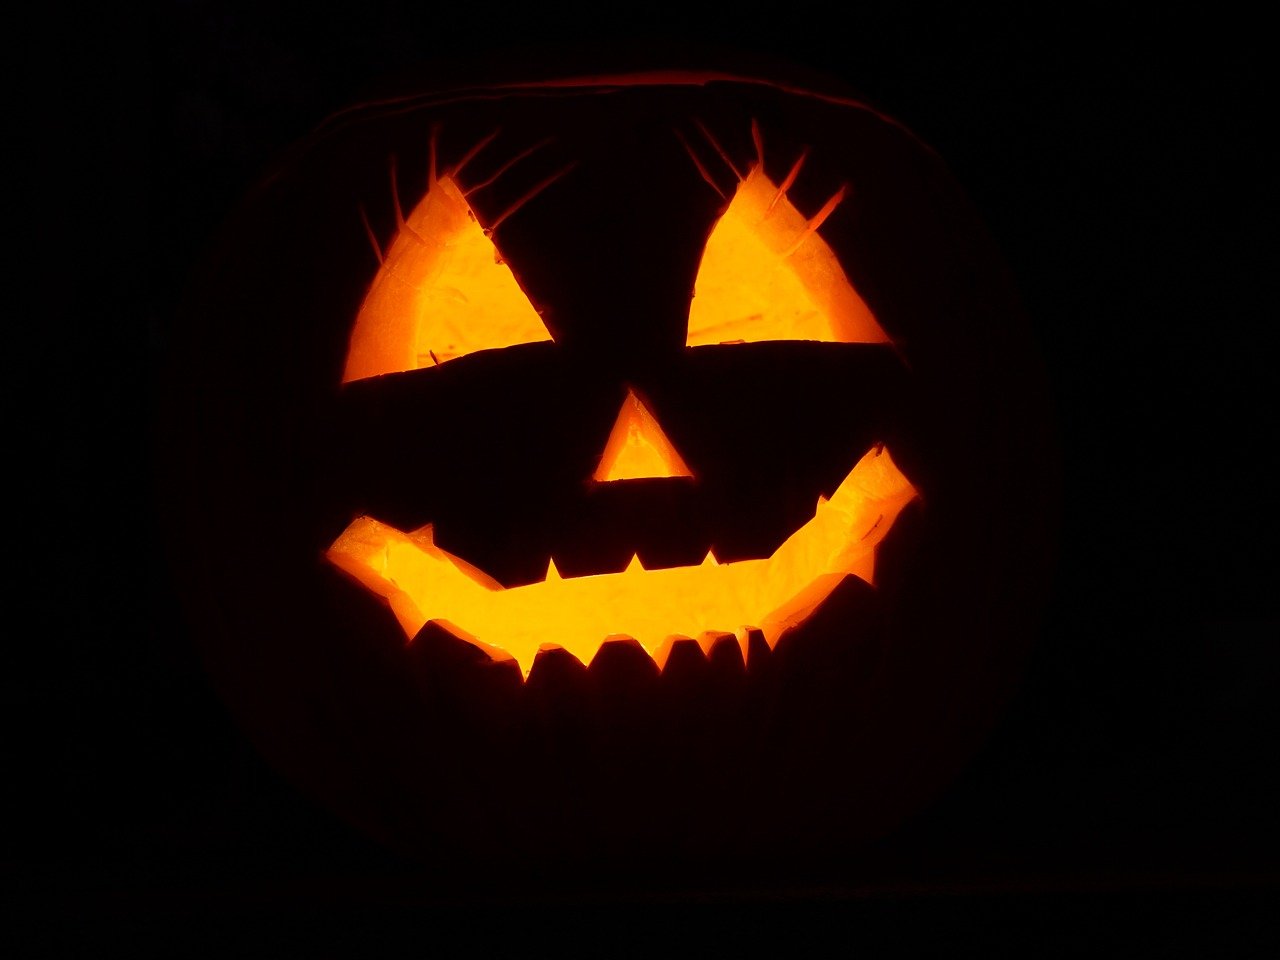 visage symbolique d'halloween